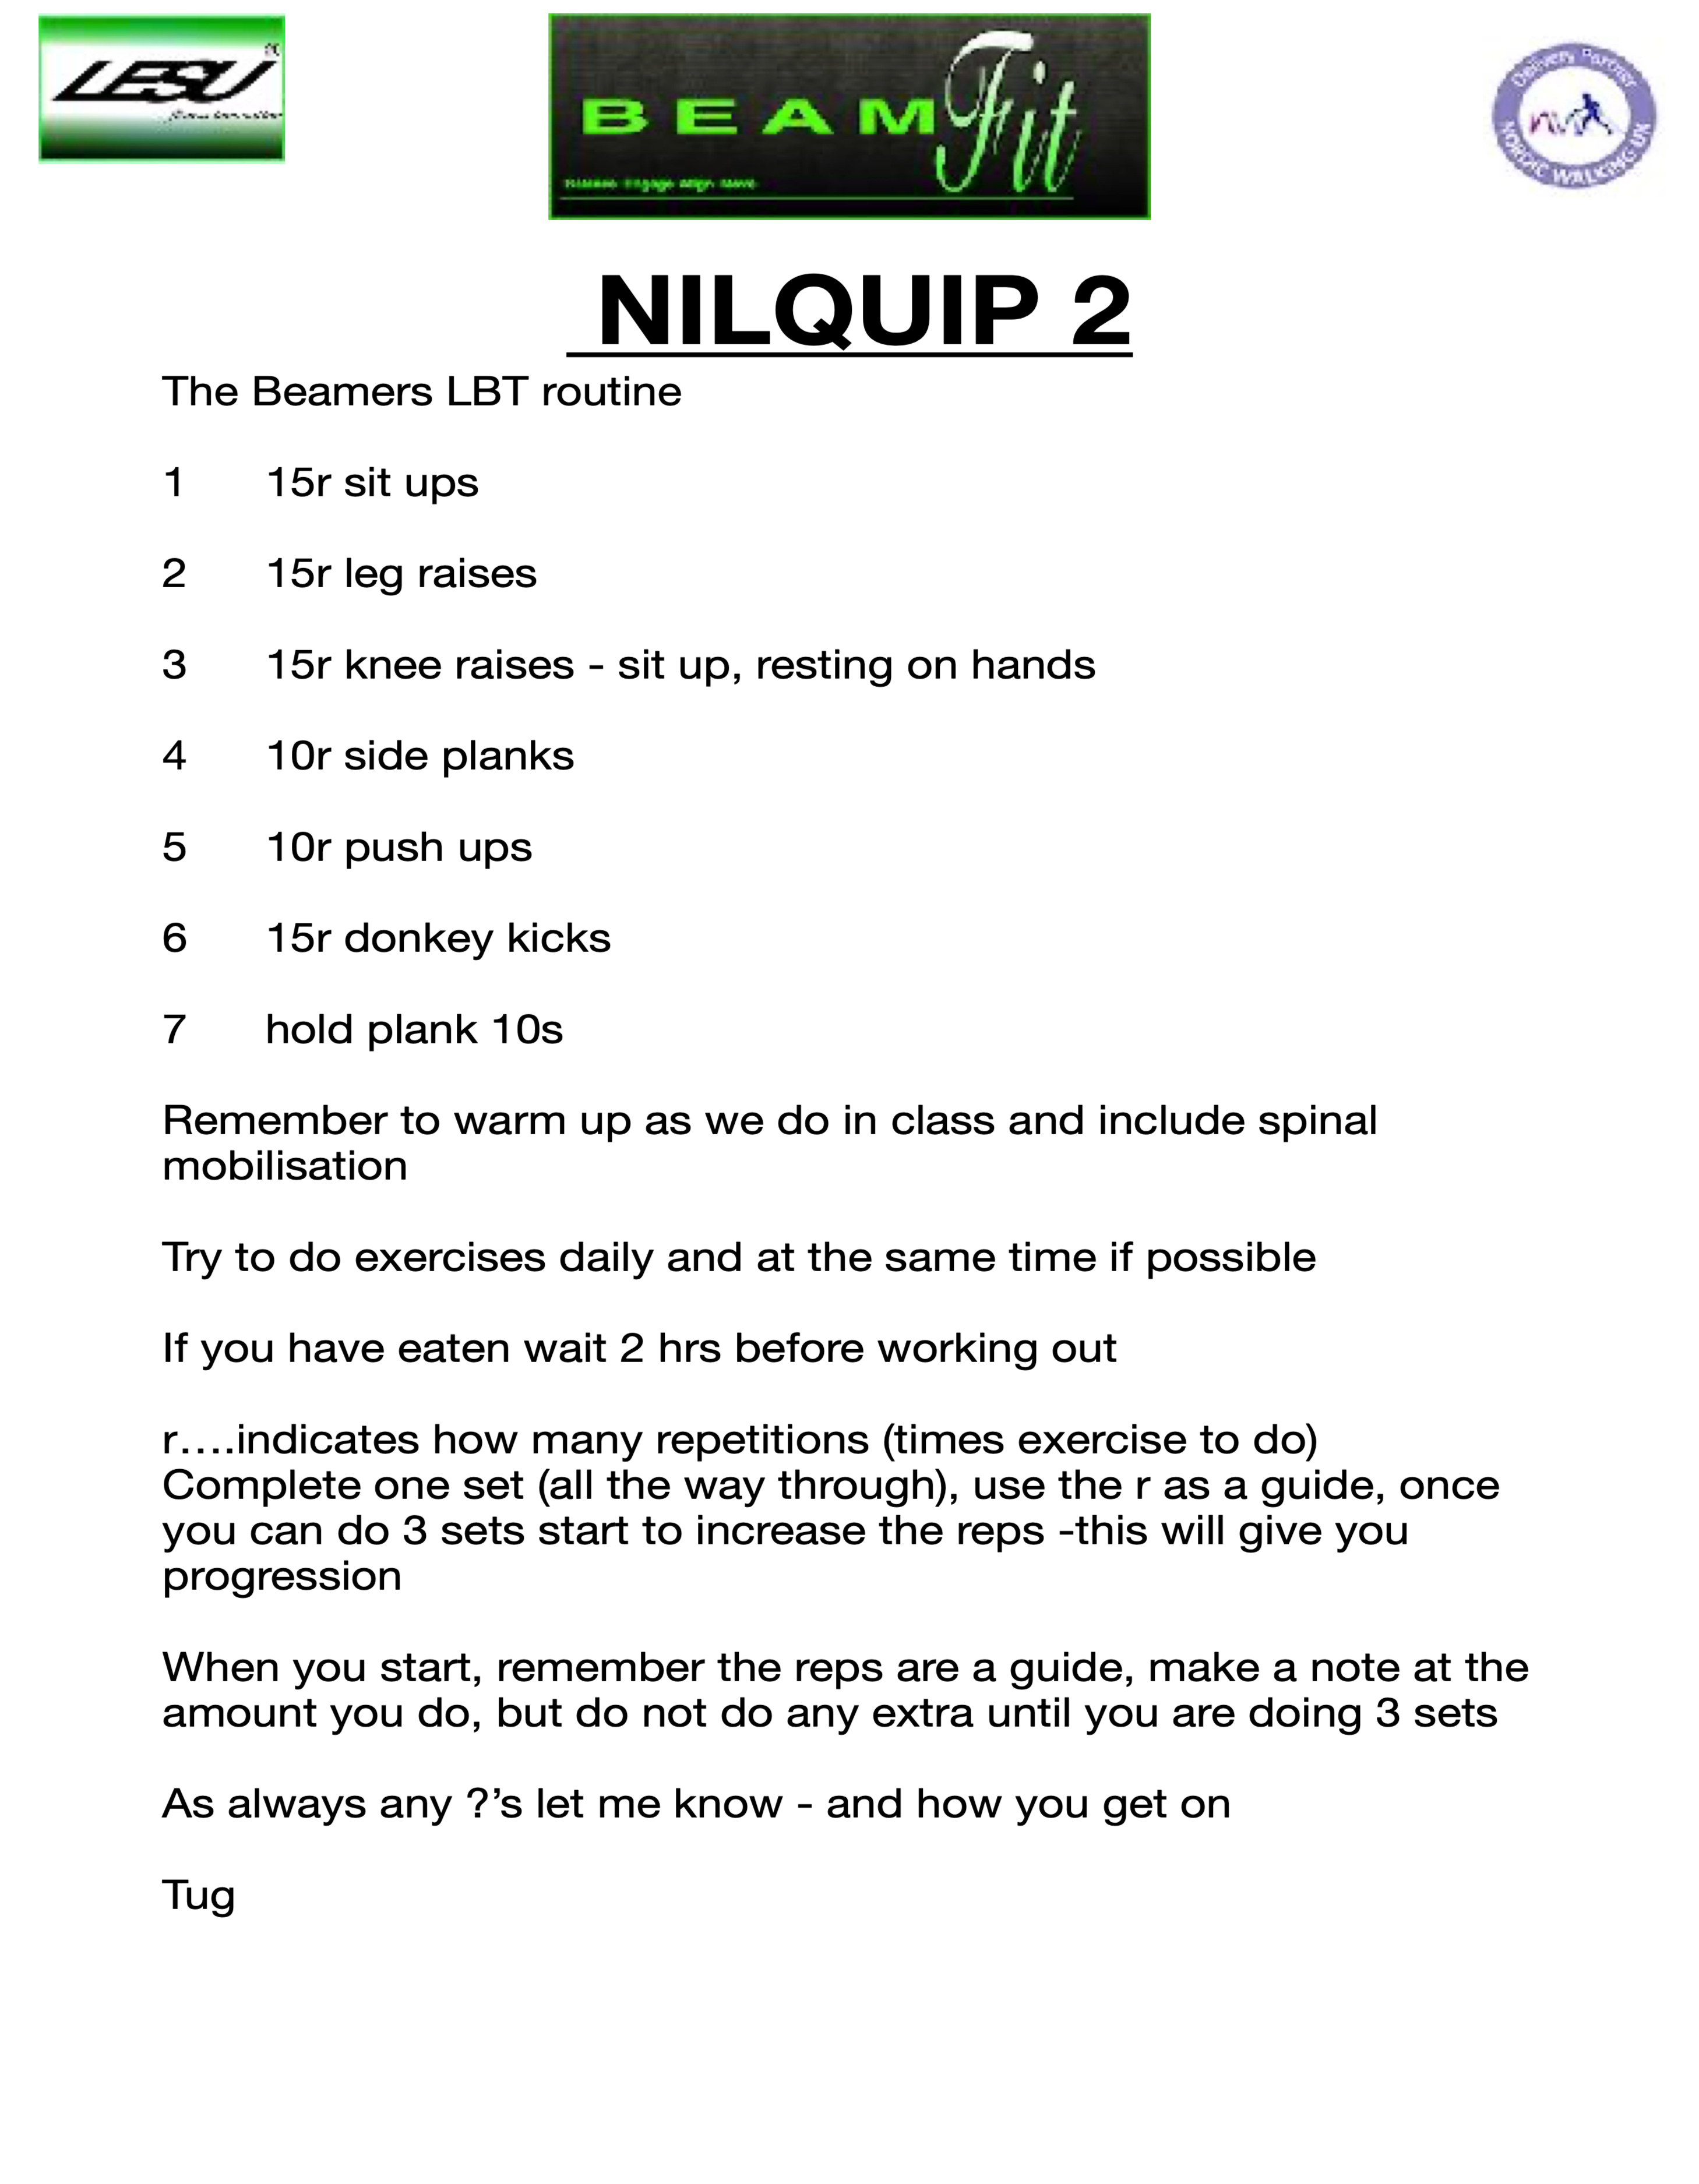 nilquip 2 blog